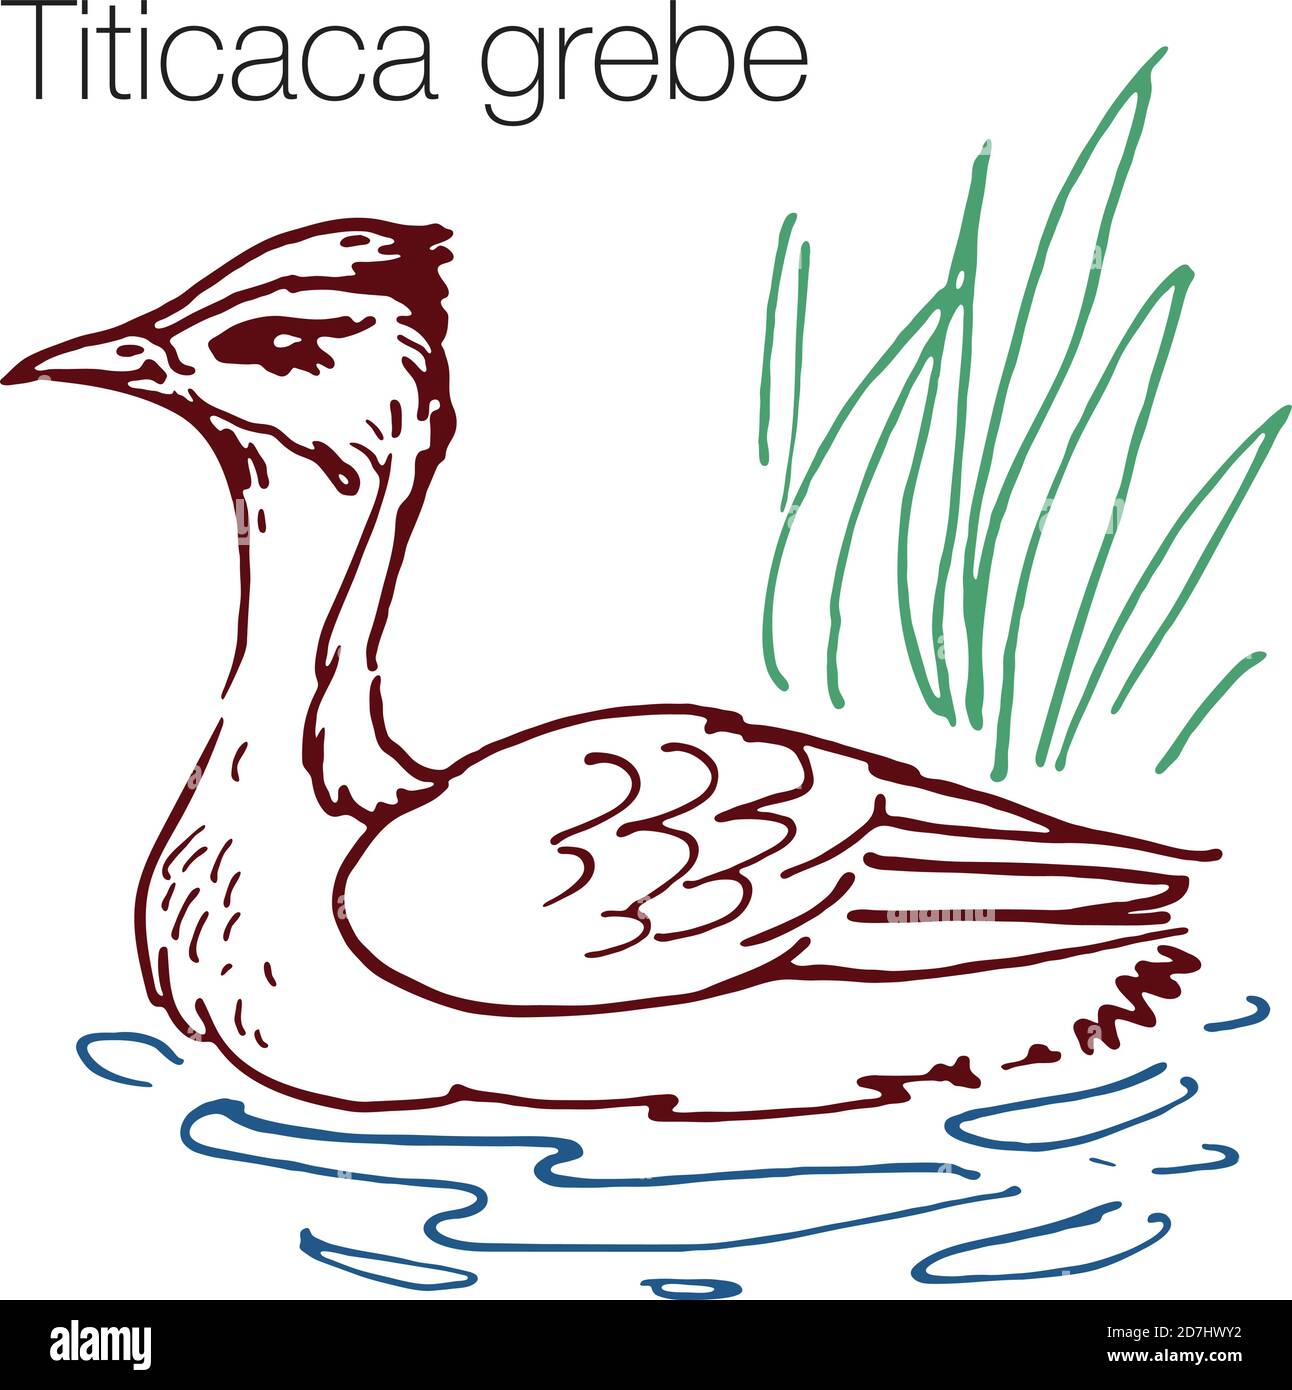 Titicaca grebe hand drawn vector illustration Stock Vector